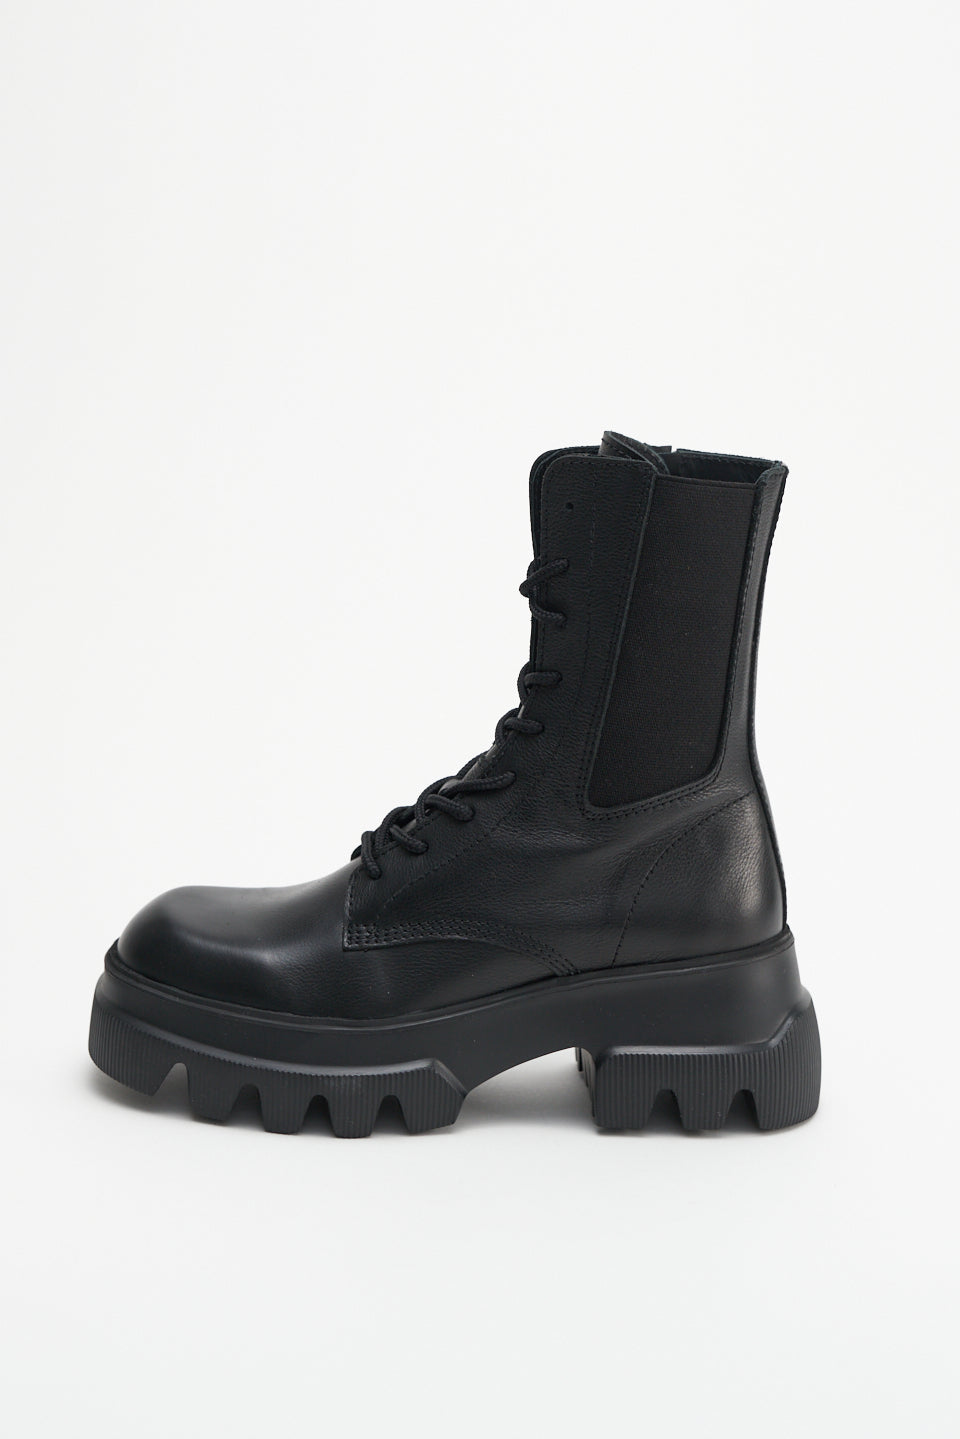 Vitello Black Combat Boots CPH169BLACK - 6